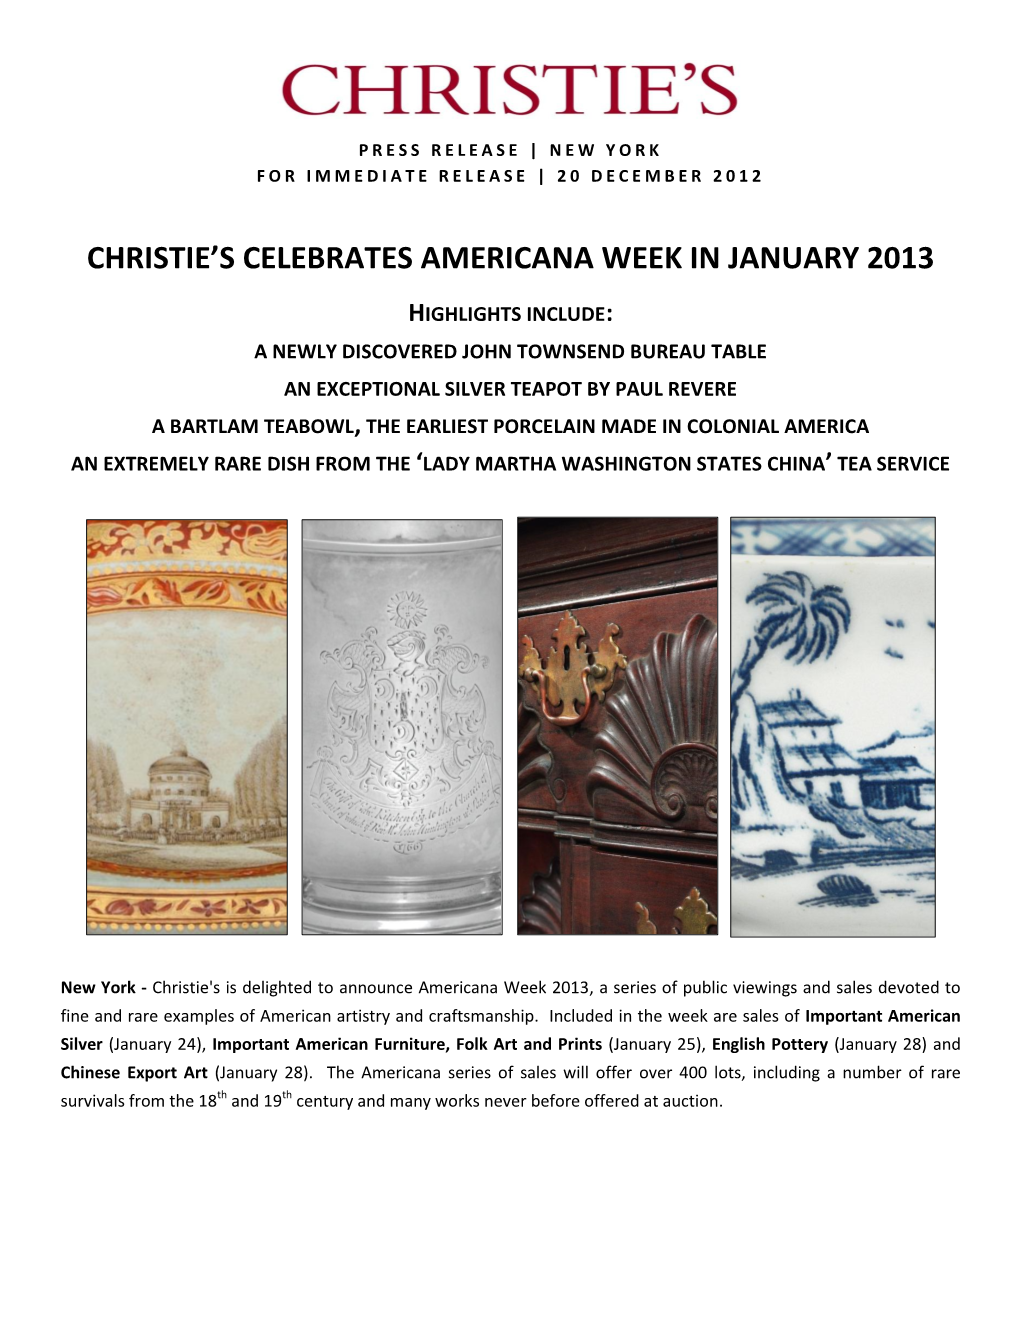 Christie's Celebrates Americana Week in January